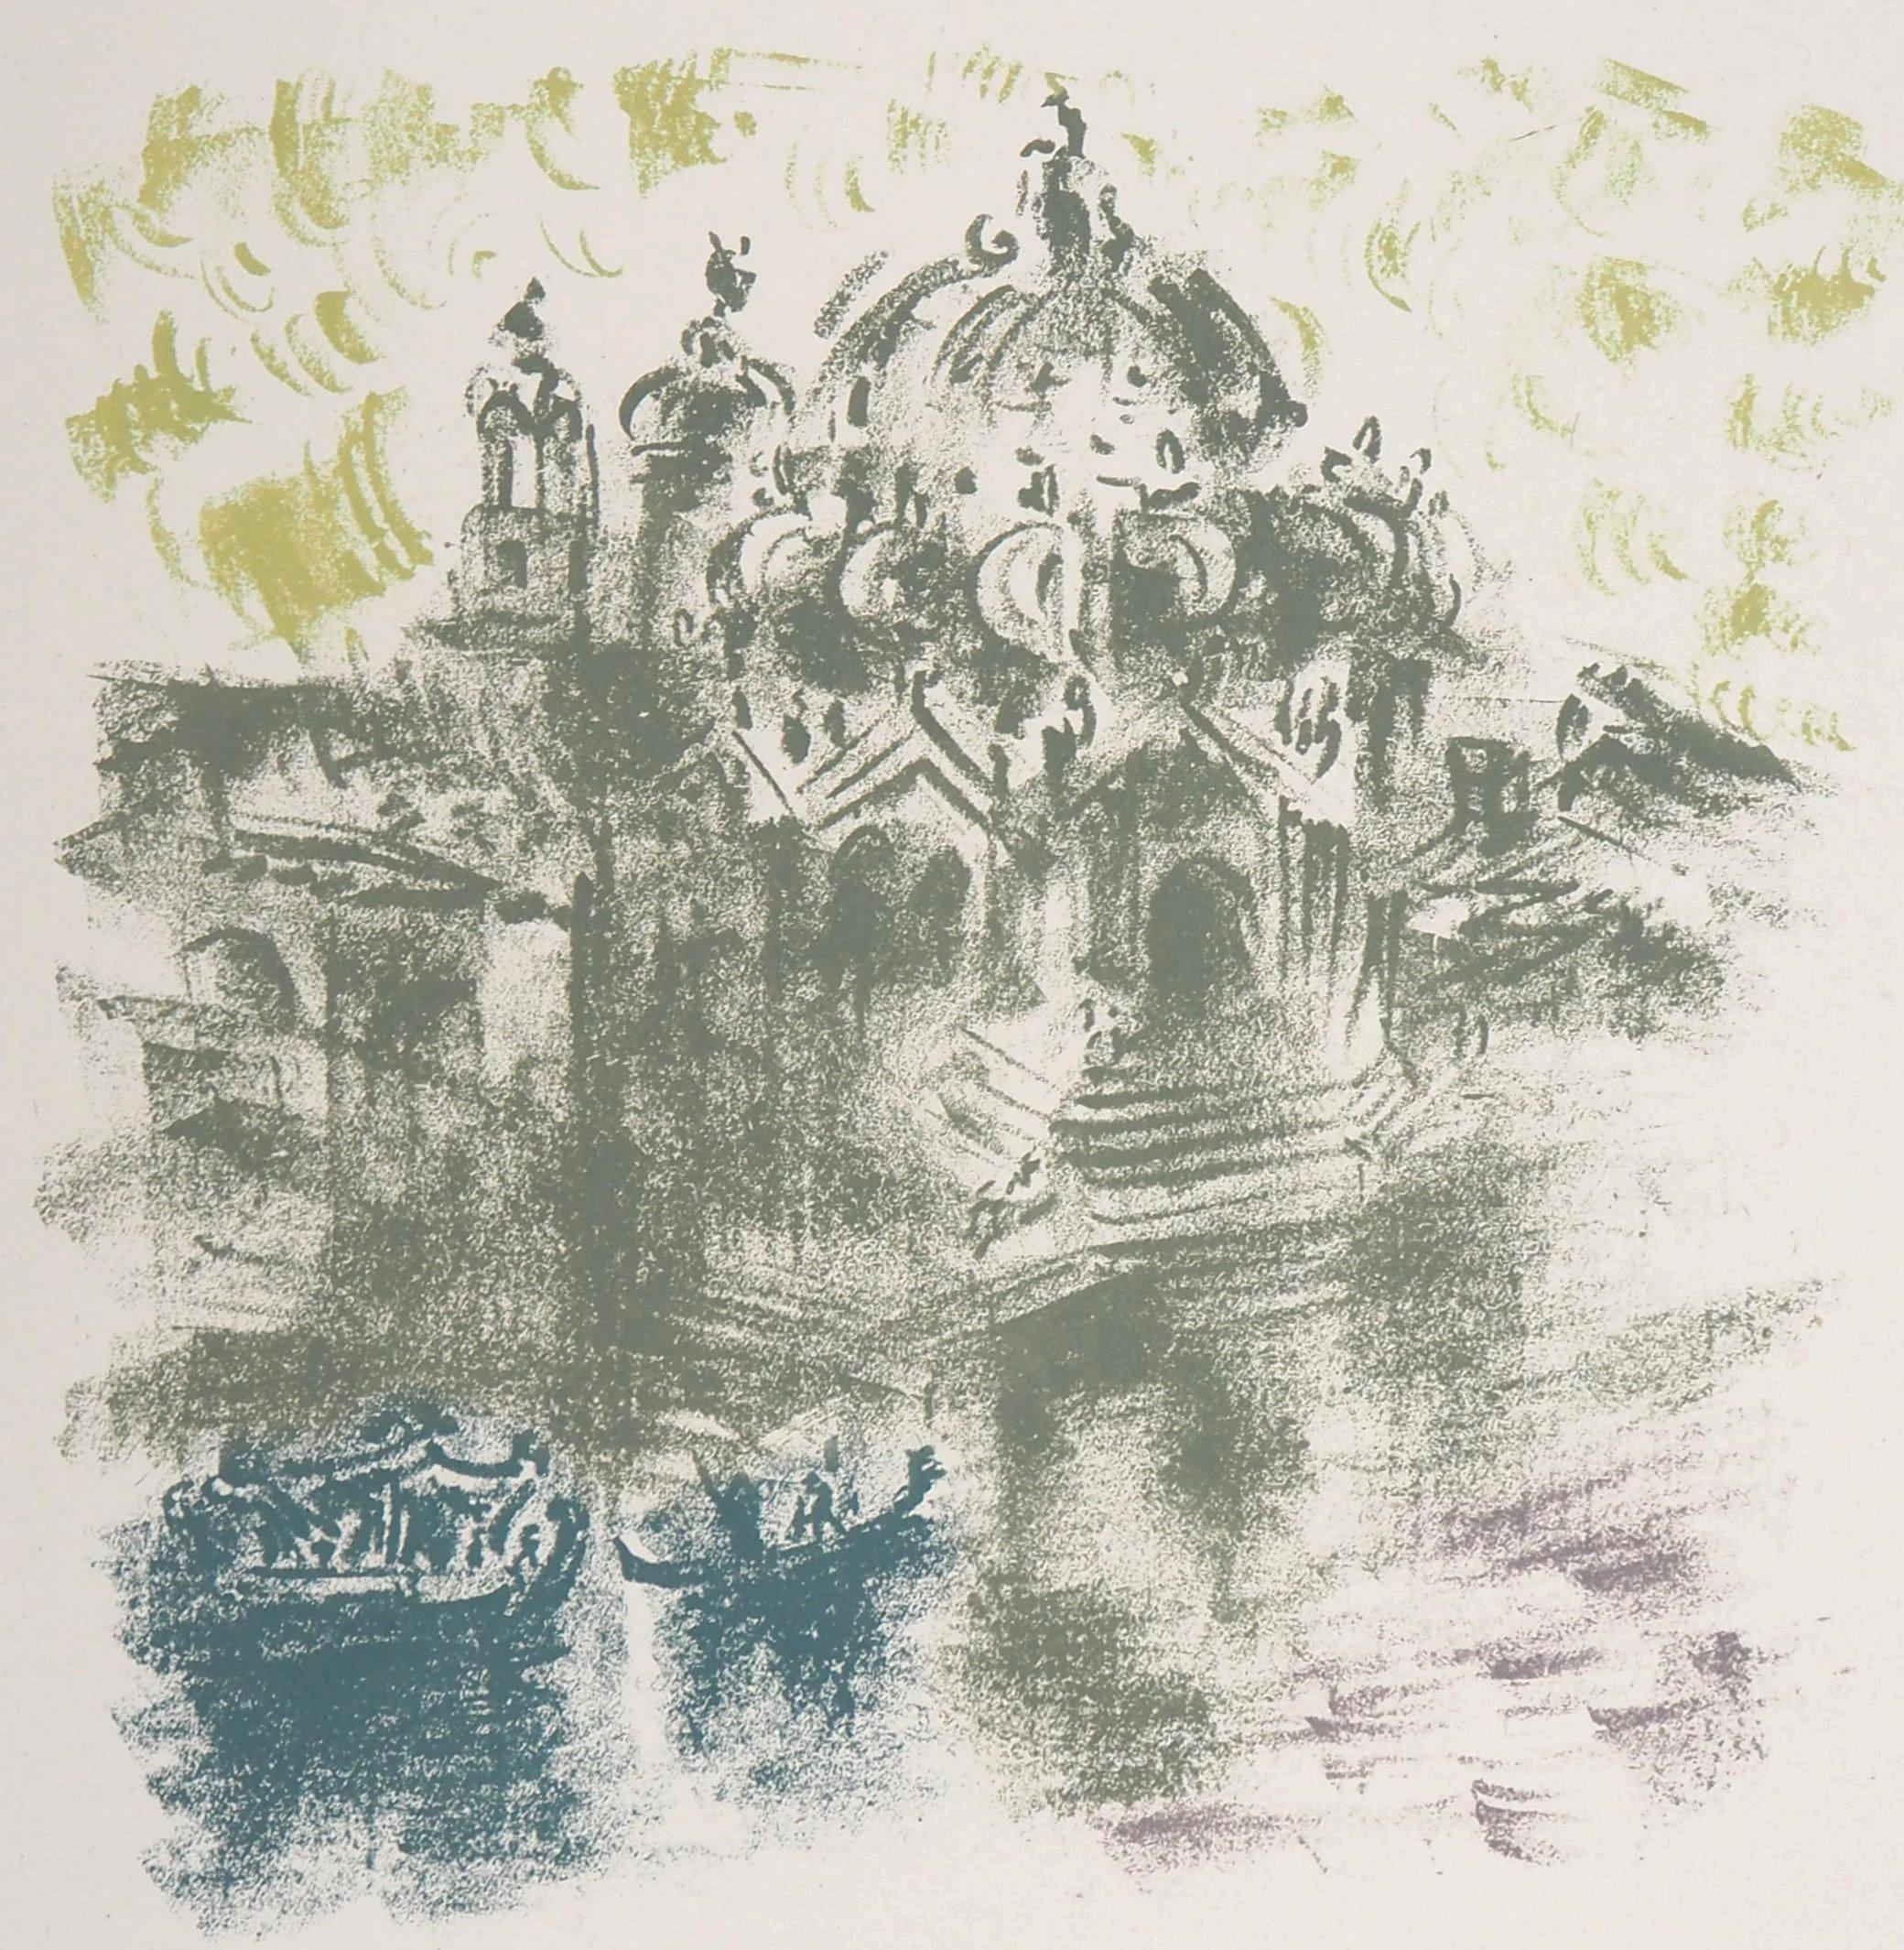 Basilica Santa Maria della Salute, Venice - Original Handsigned Lithograph - Modern Print by André Masson